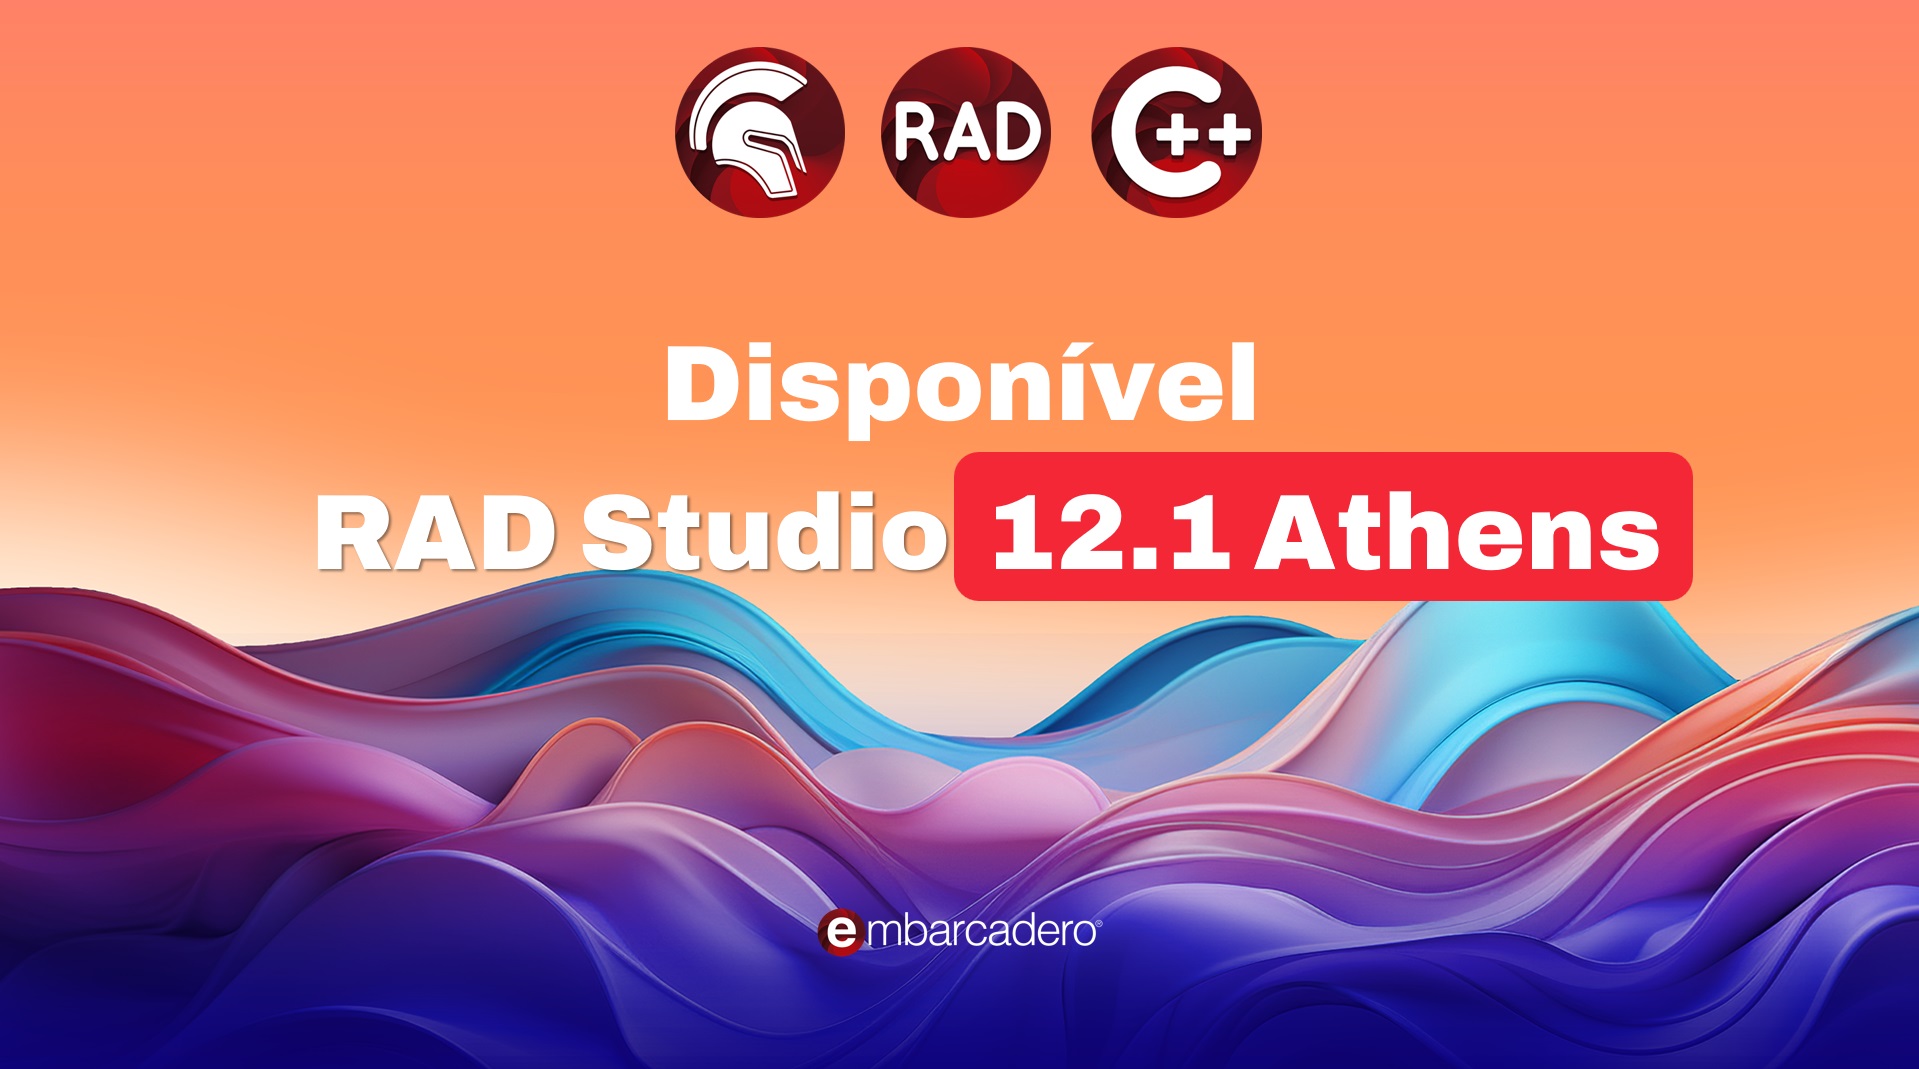 RAD Studio 12.1 disponível